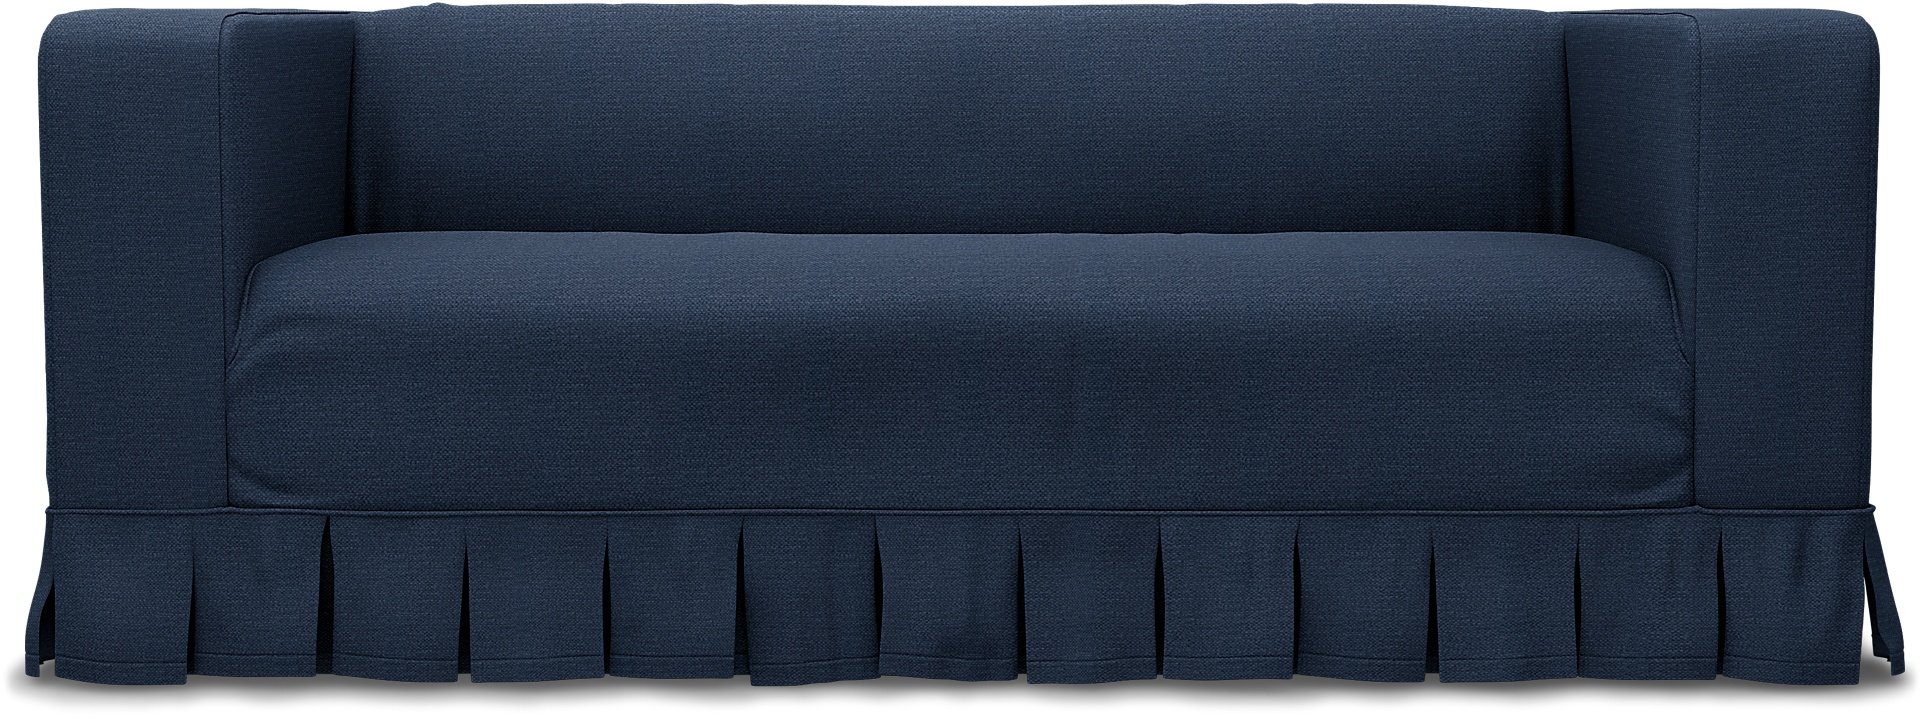 IKEA - Klippan 2 Seater Sofa Cover, Navy Blue, Linen - Bemz